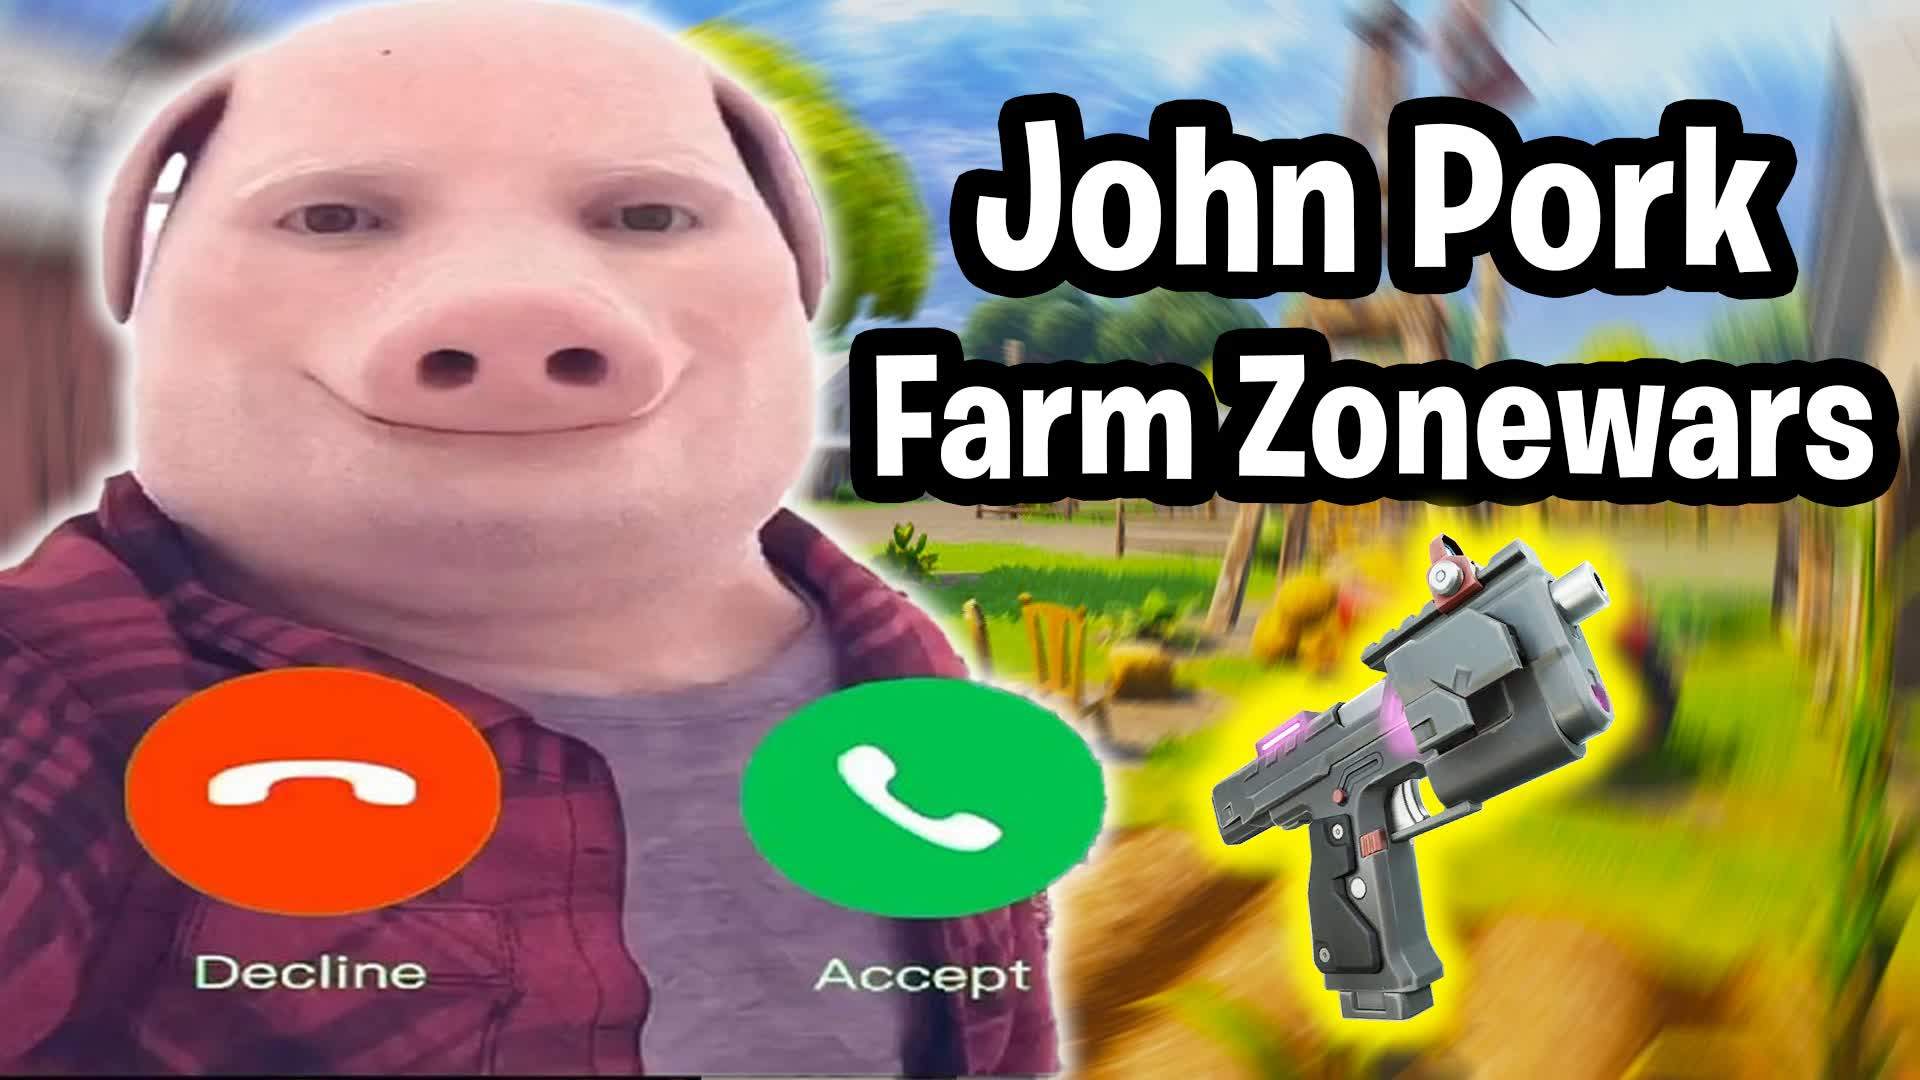 John Pork Farm Zonewars. - Fortnite Creative Map Code - Dropnite